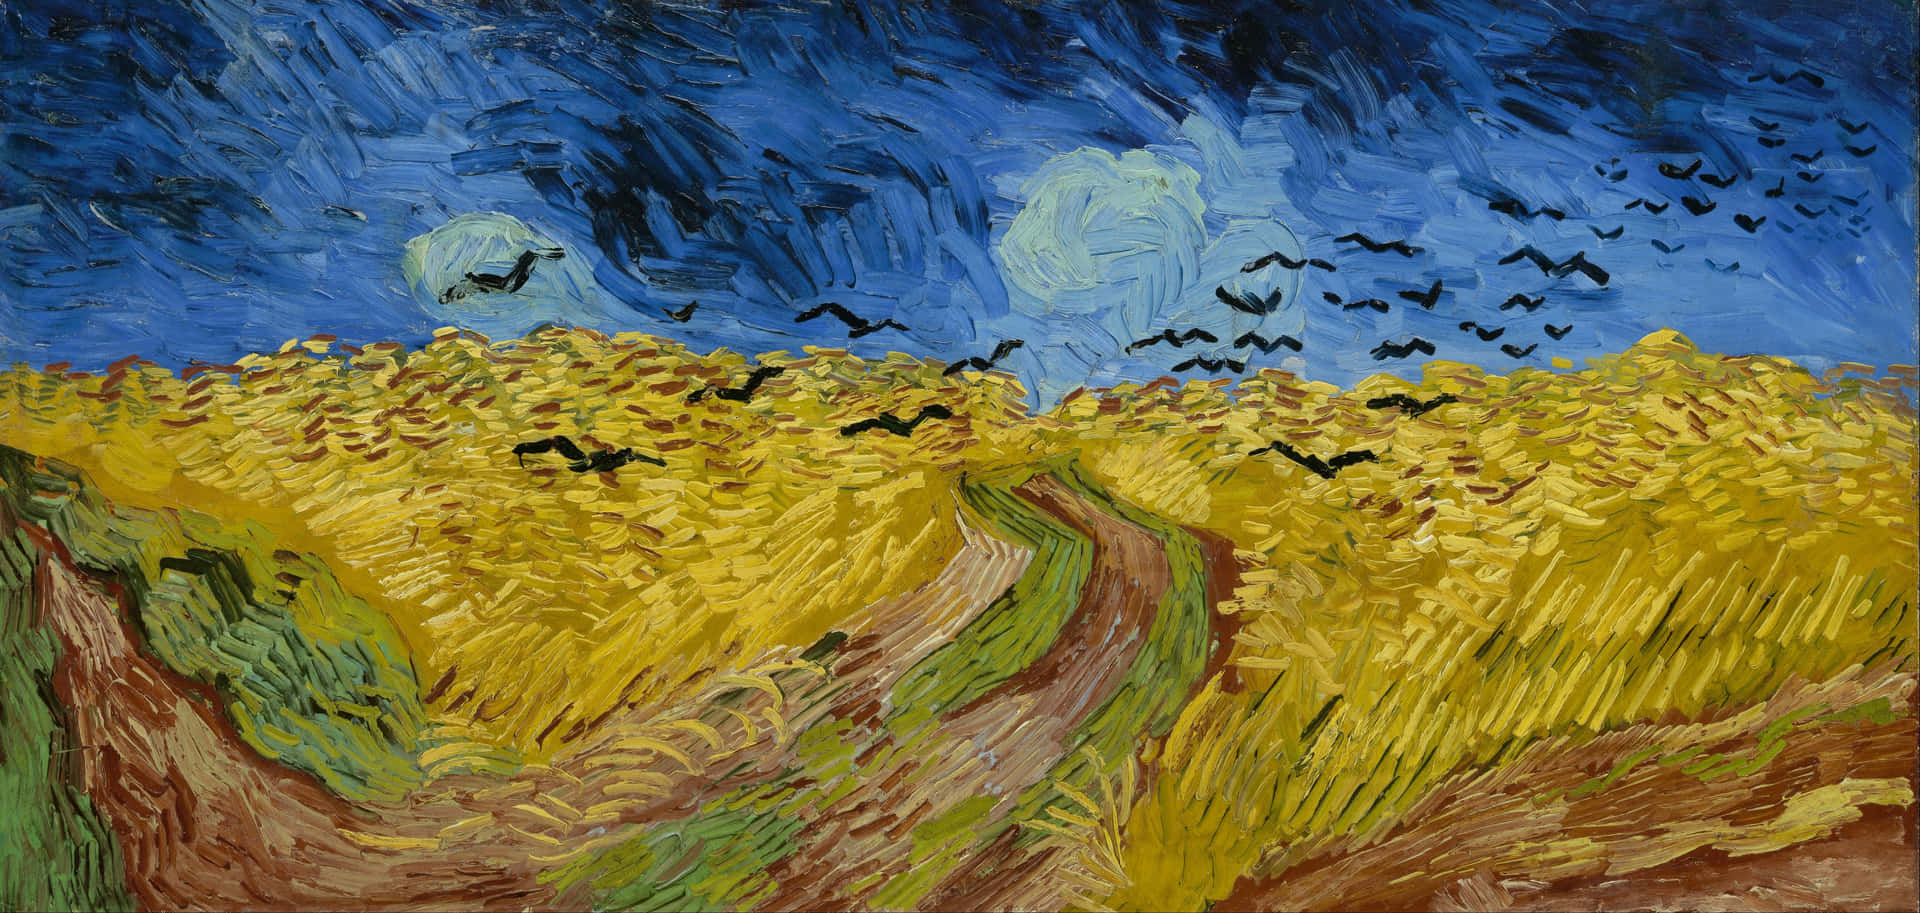 A landscape by the master artist, Vincent Van Gogh